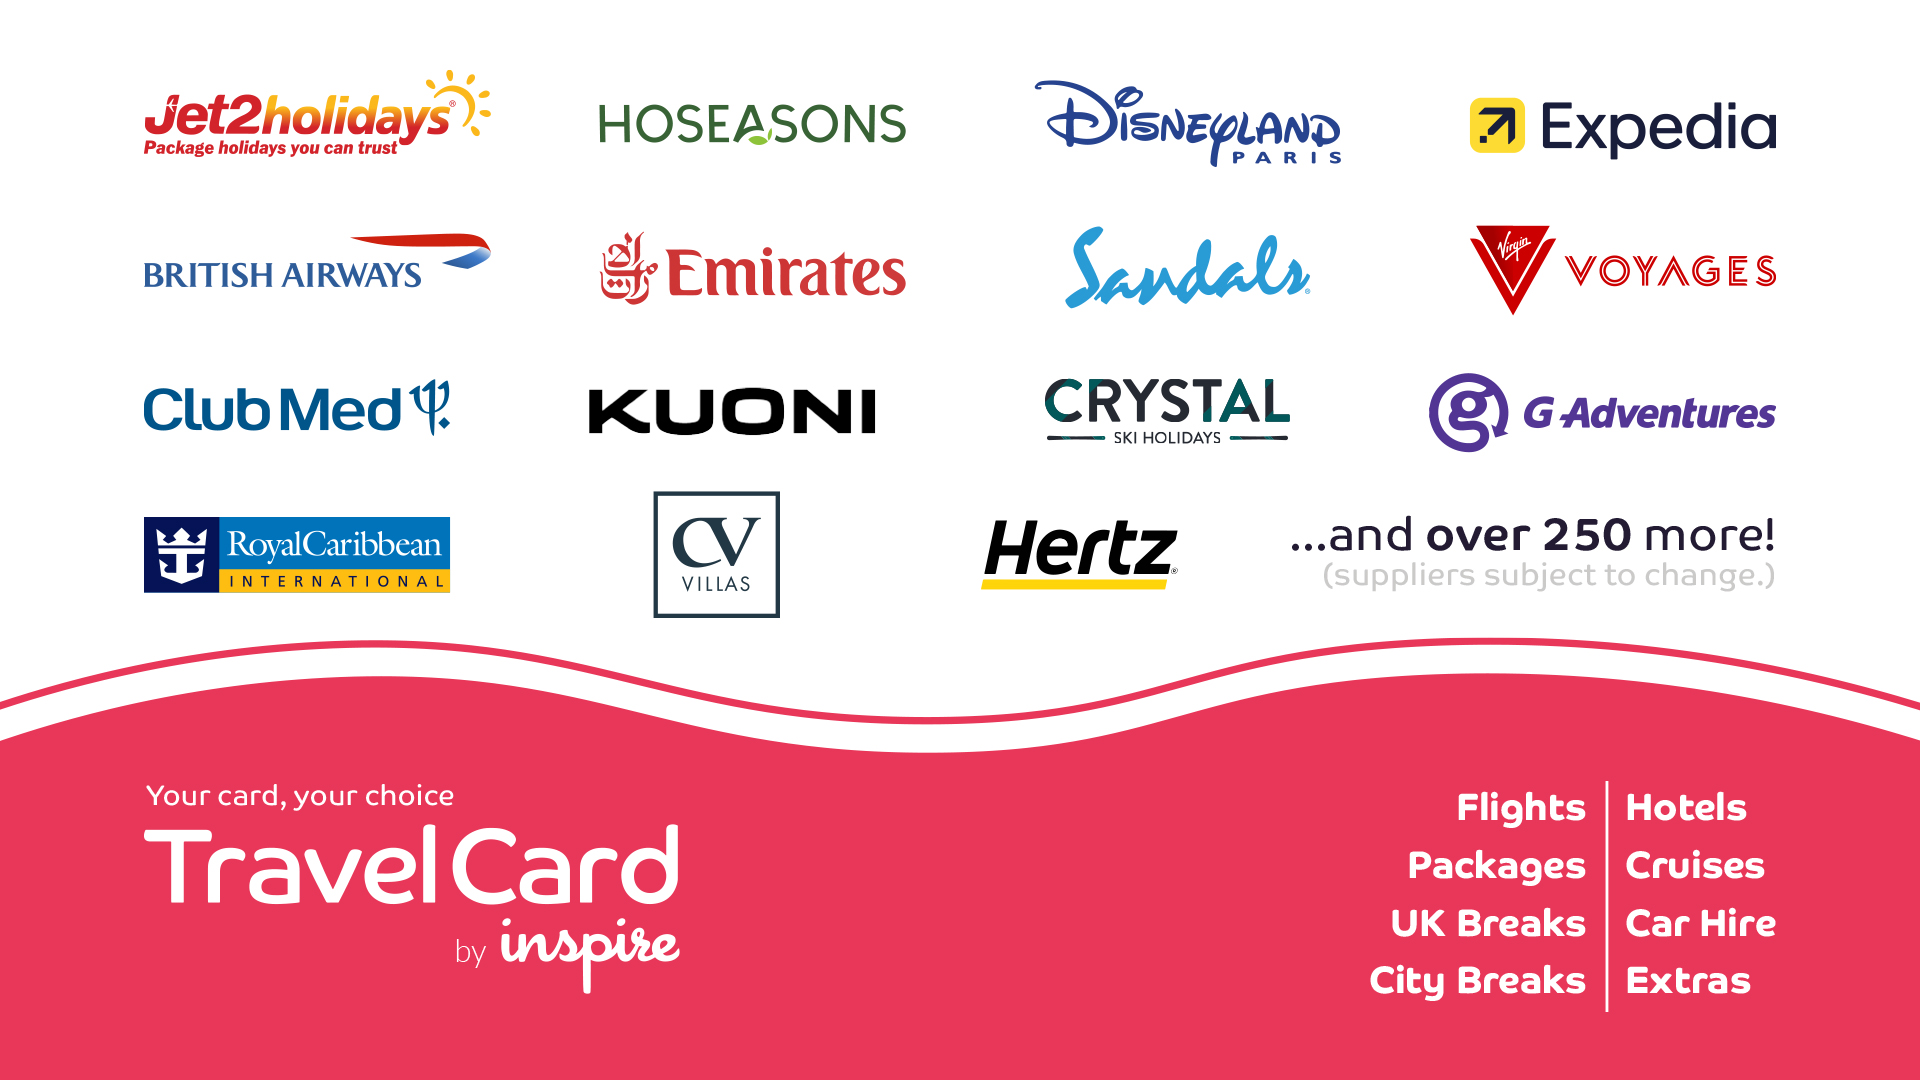 Inspire TravelCard £25 Gift Card UK